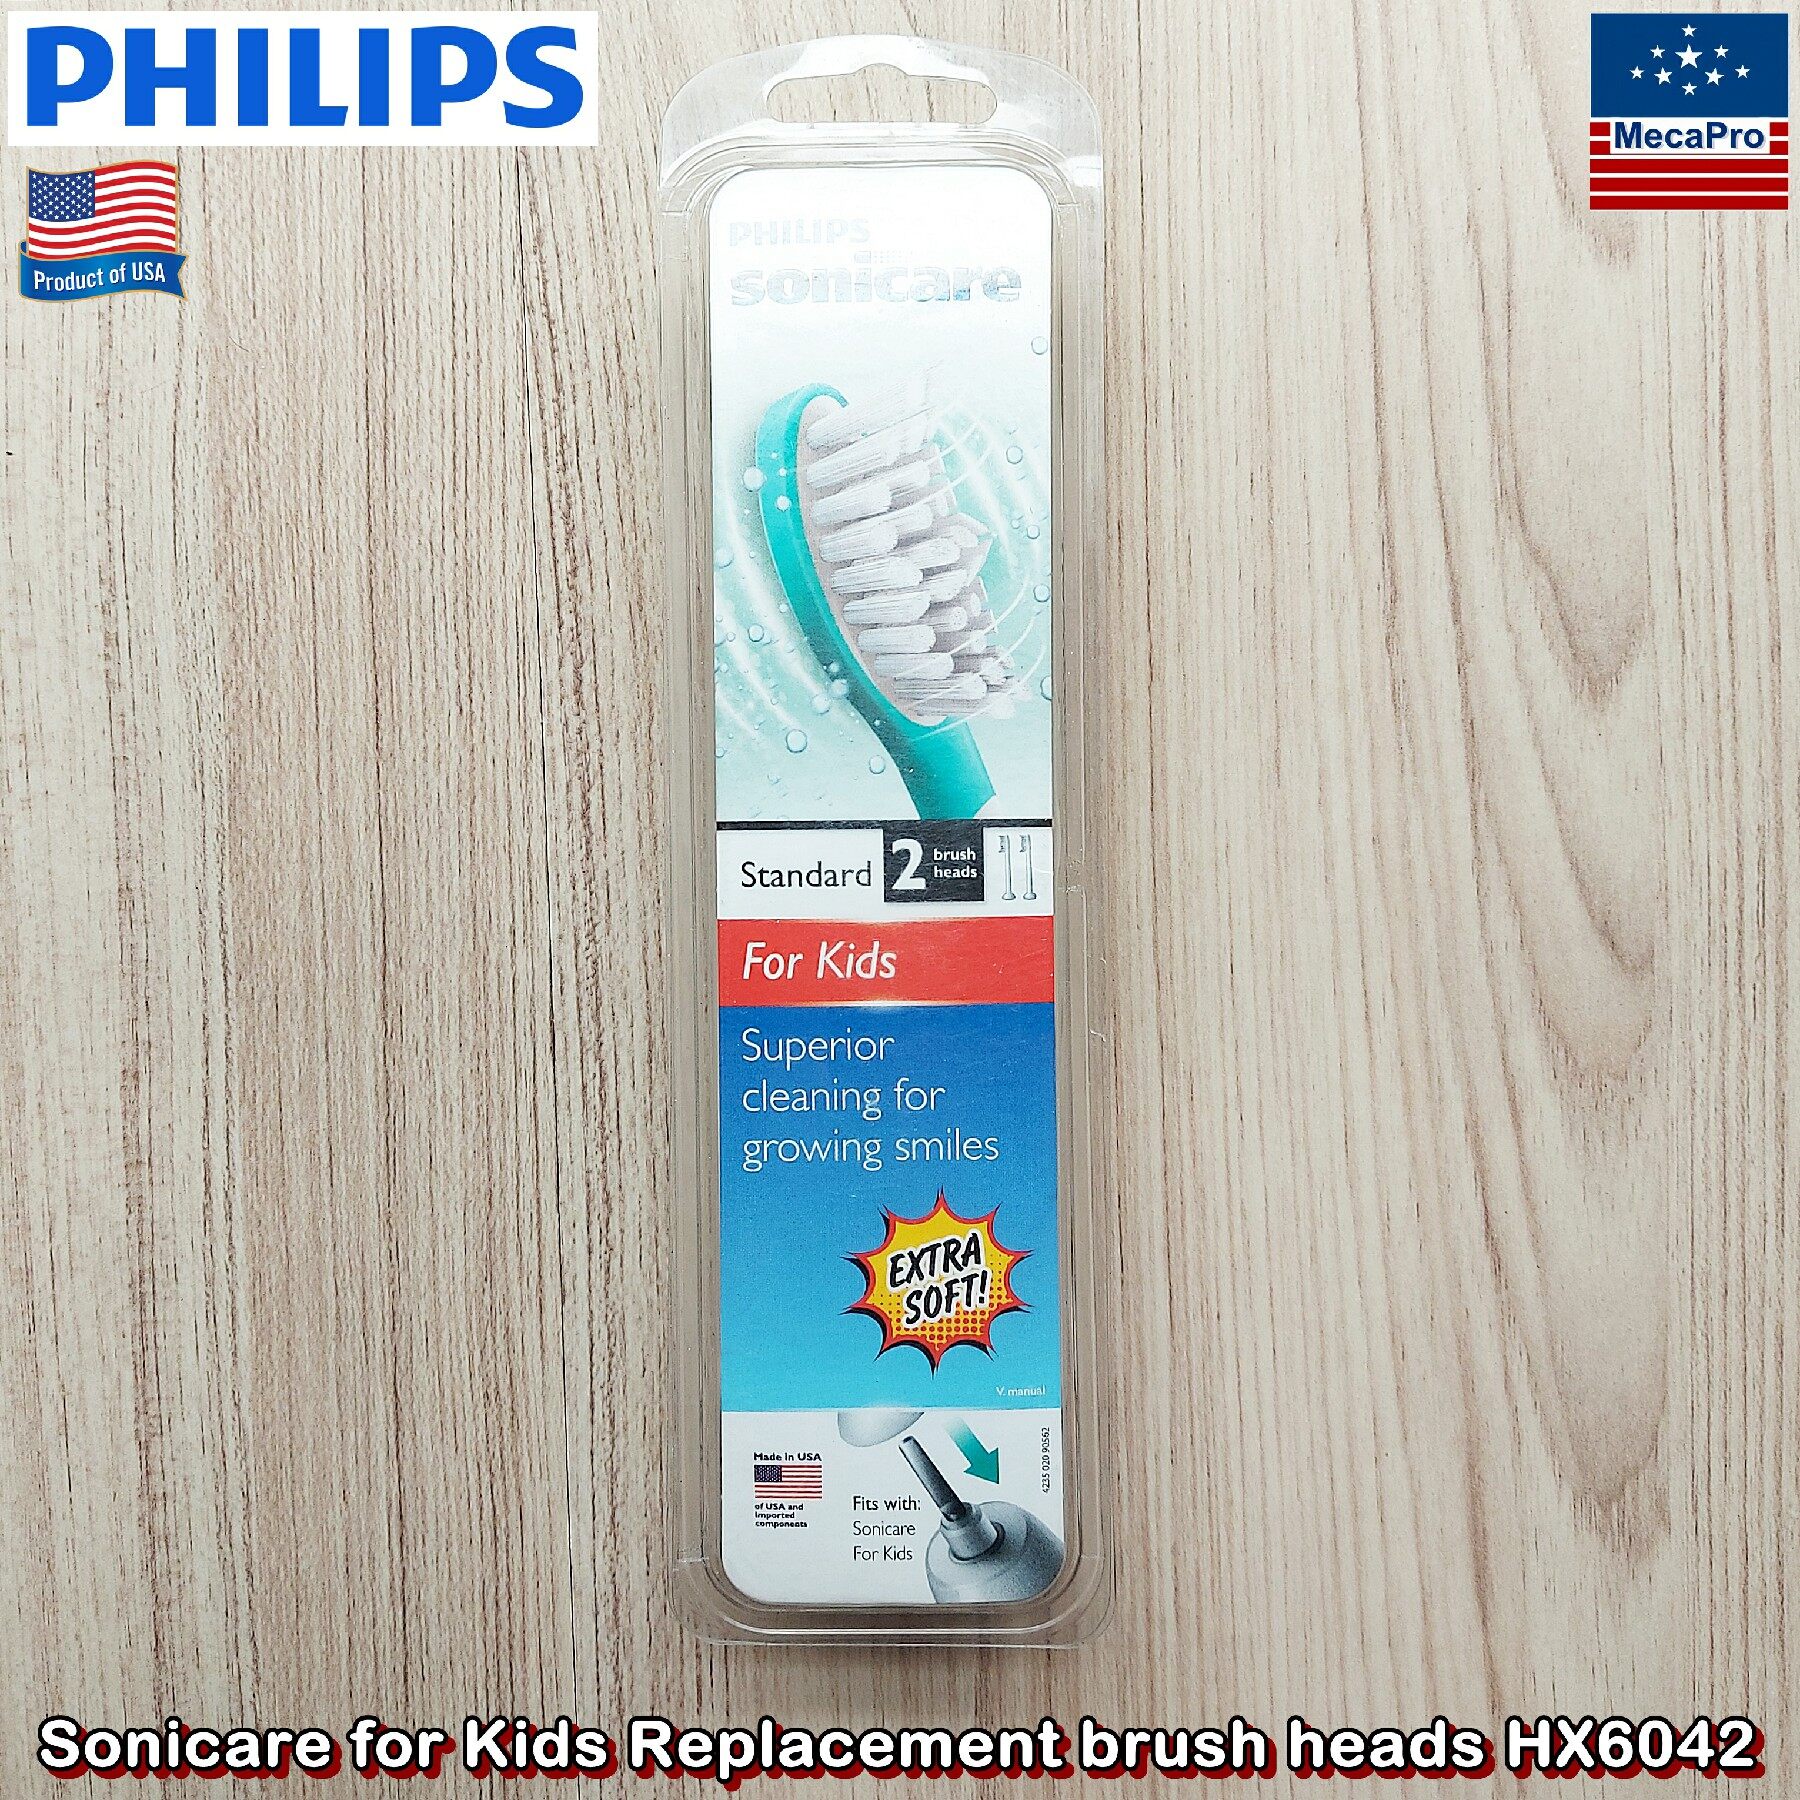 Philips® Sonicare for Kids Replacement brush heads HX6042 ฟิลิปส์ หัวแปรงสีฟันไฟฟ้า สำหรับเด็ก 2 ชิ้น/แพ็ค